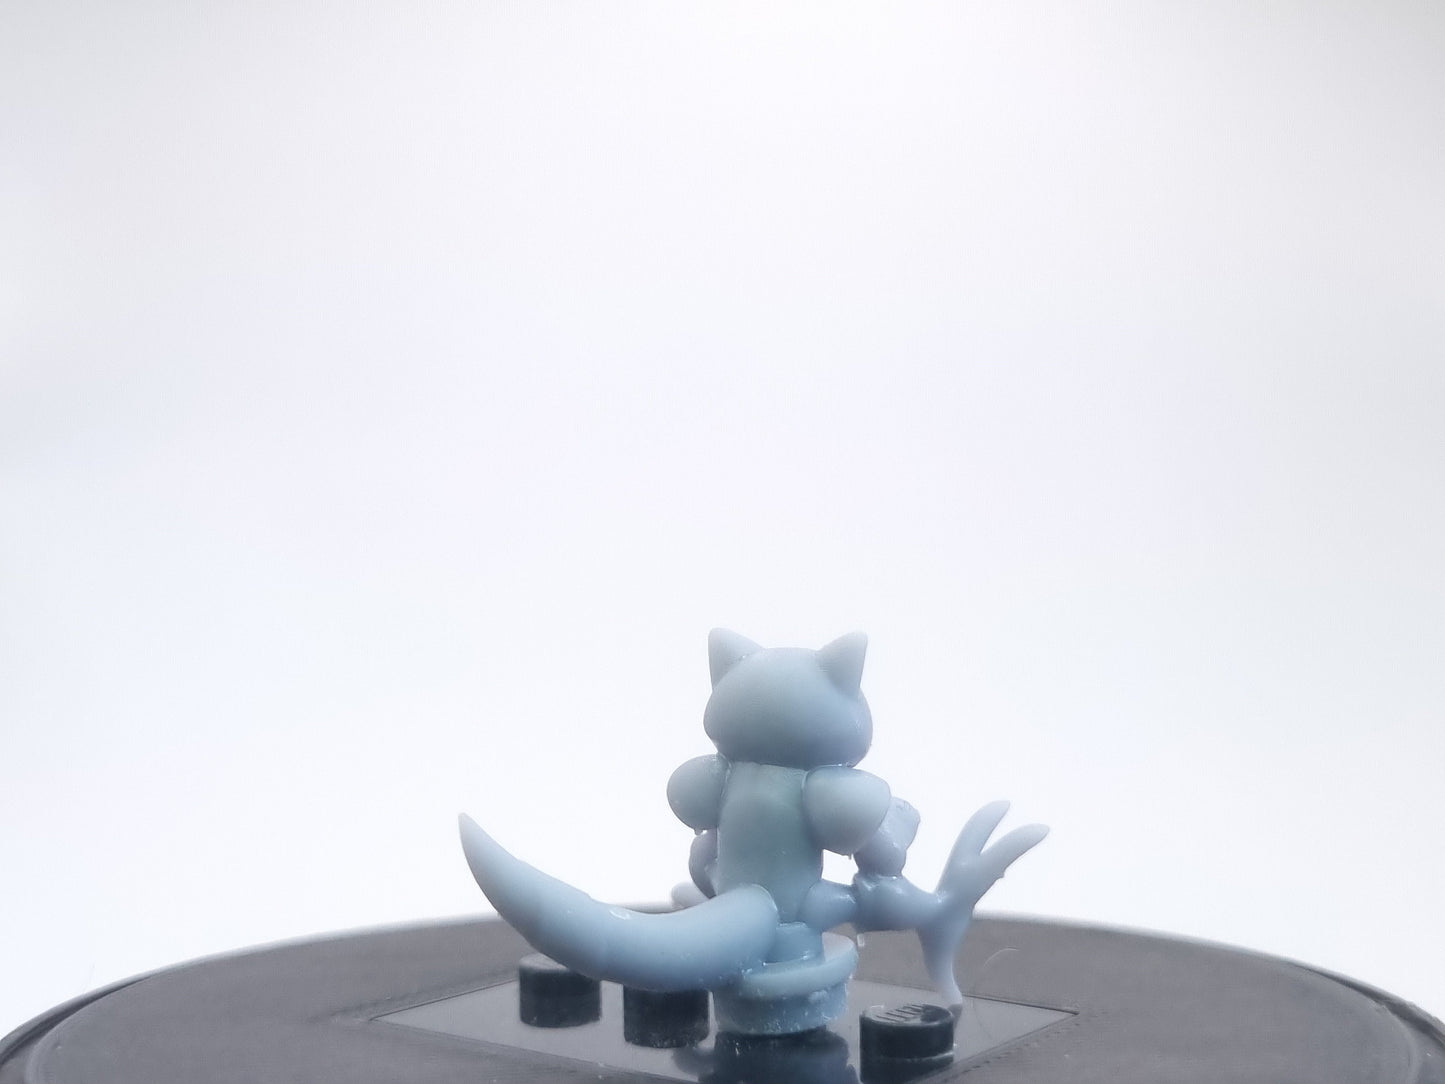 Building toy custom 3D printed magic guy!